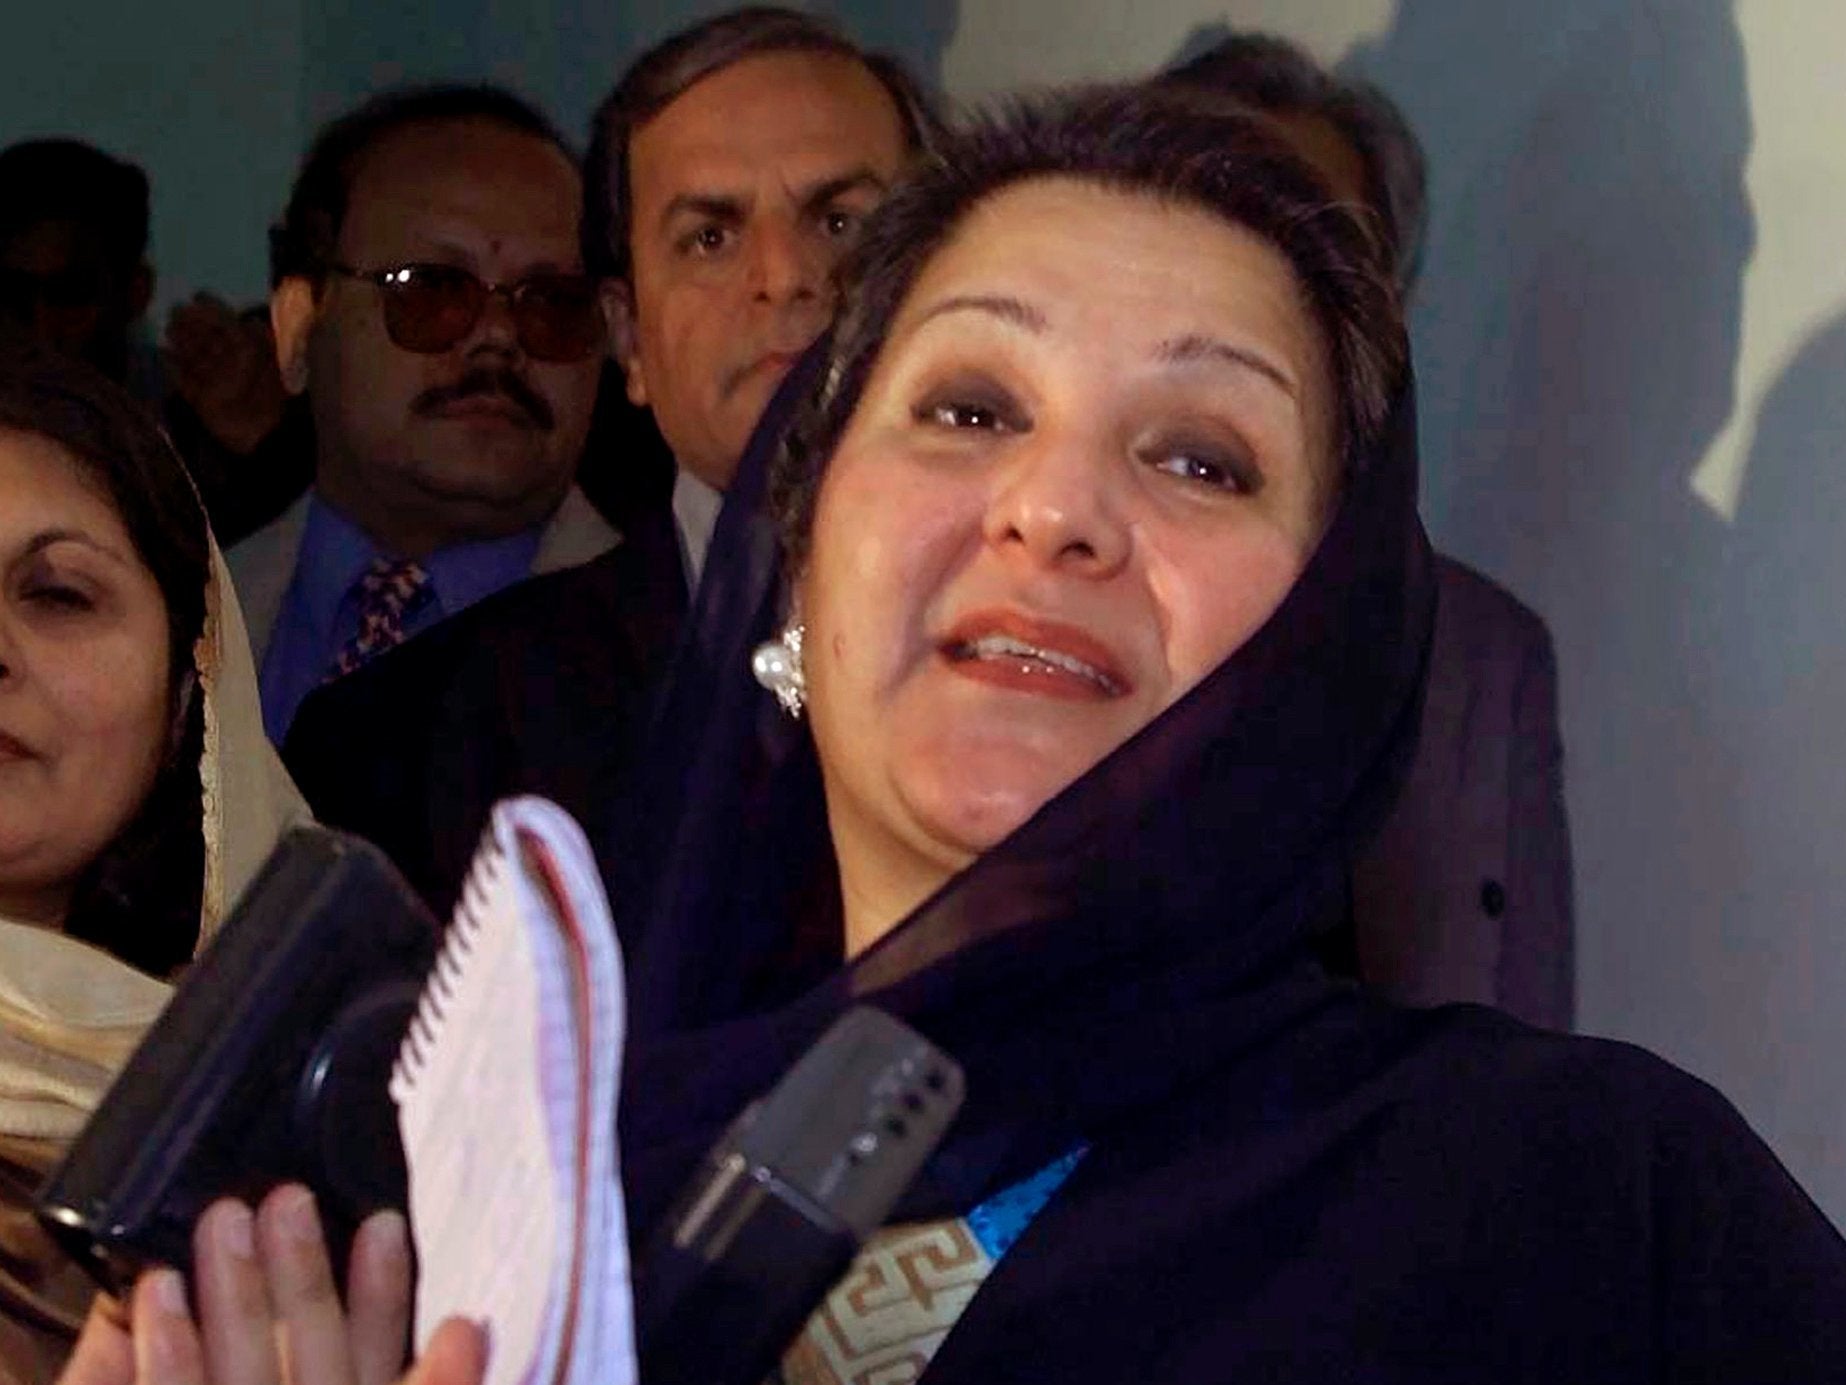 Kulsoom Nawaz, wife of Pakistan's former prime minister, Nawaz Sharif, talks to reporters in Islamabad, Pakistan (File photo)